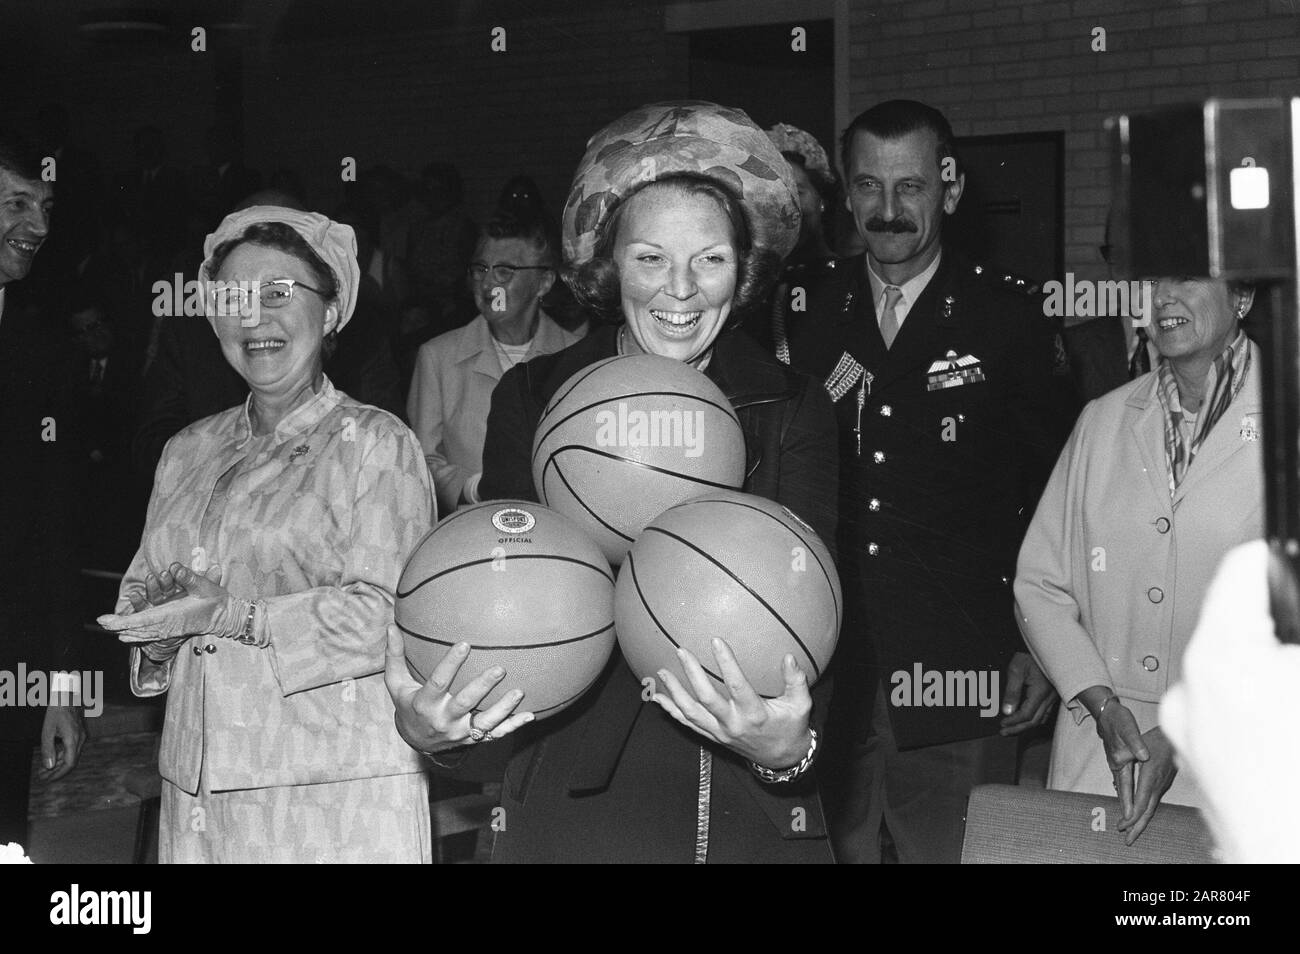 Princess Beatrix opens sports hall Strijland in Nijkerk, Beatrix with three balls for her children Date: September 26, 1972 Location: Nijkerk Keywords: openings, princesses, sports halls Personal name: Beatrix, princess, Strijland Stock Photo